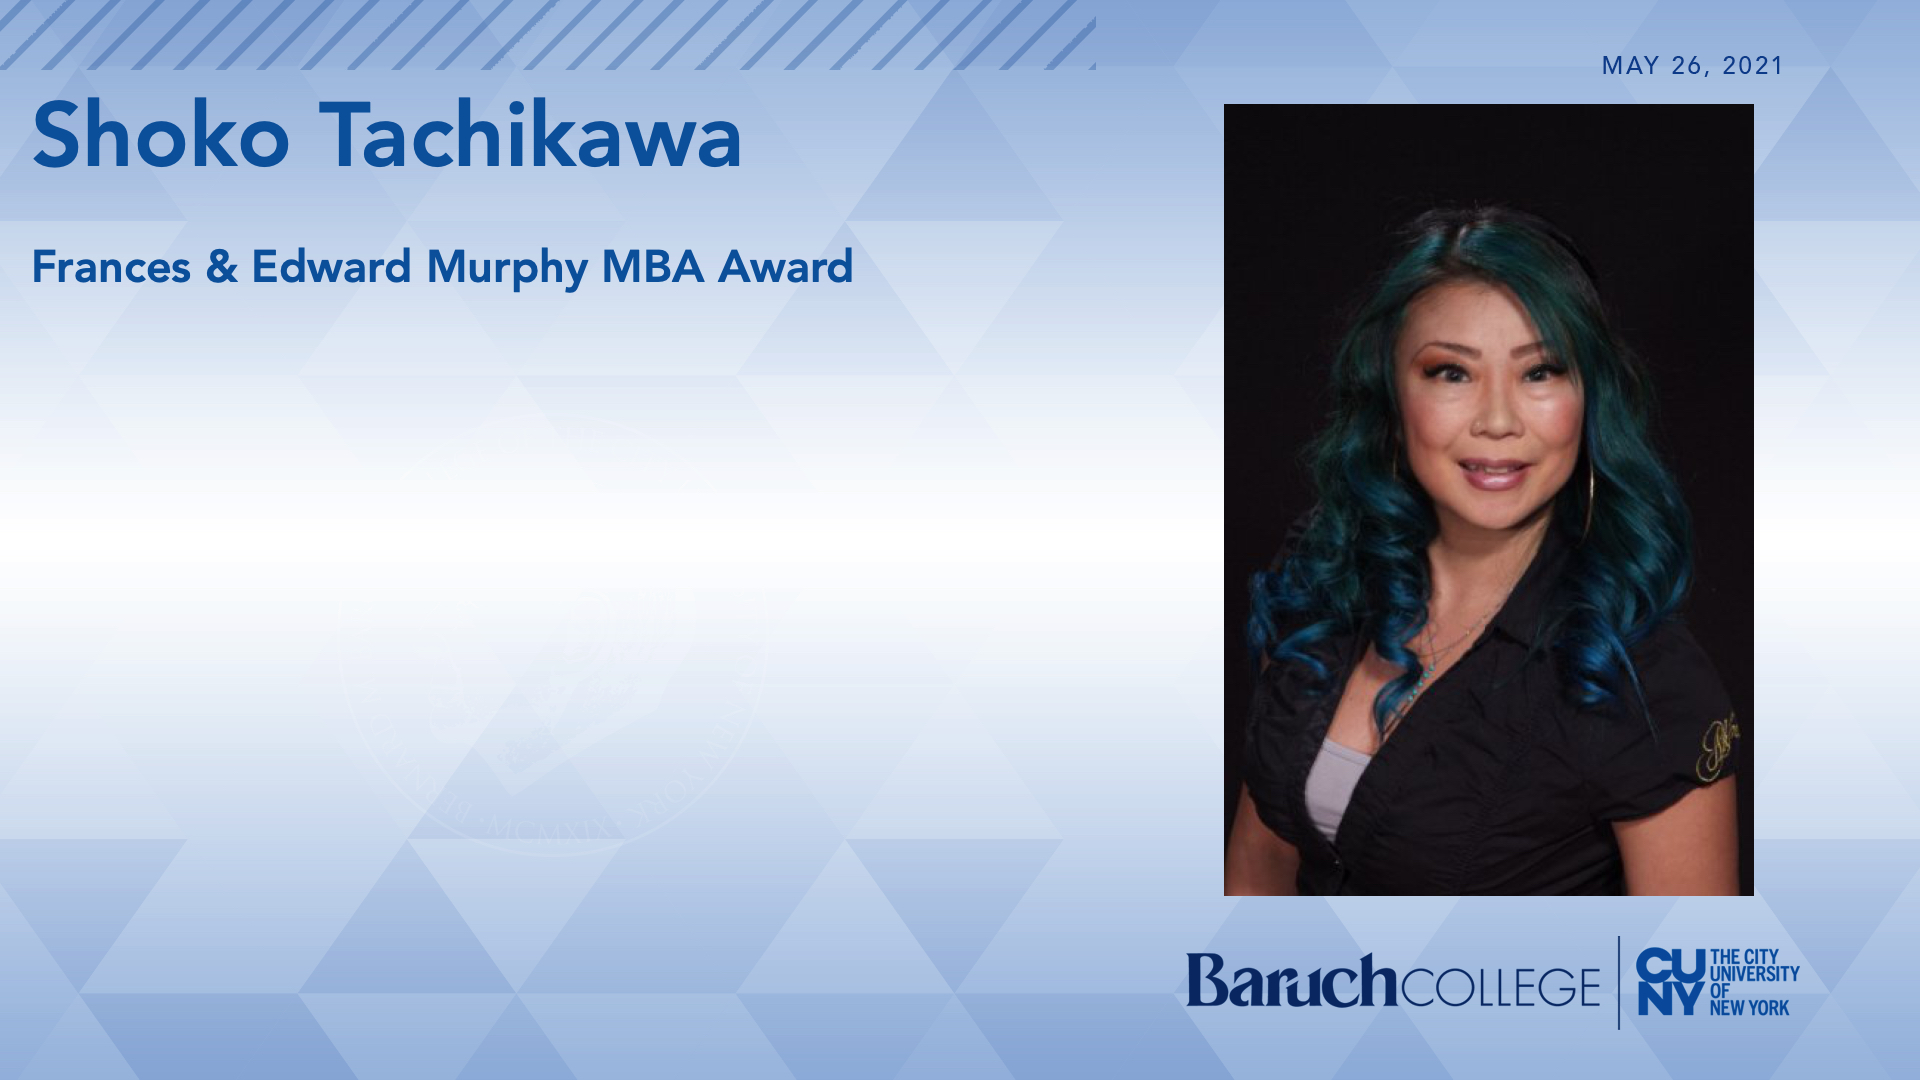 Frances & Edward Murphy MBA Award 2021